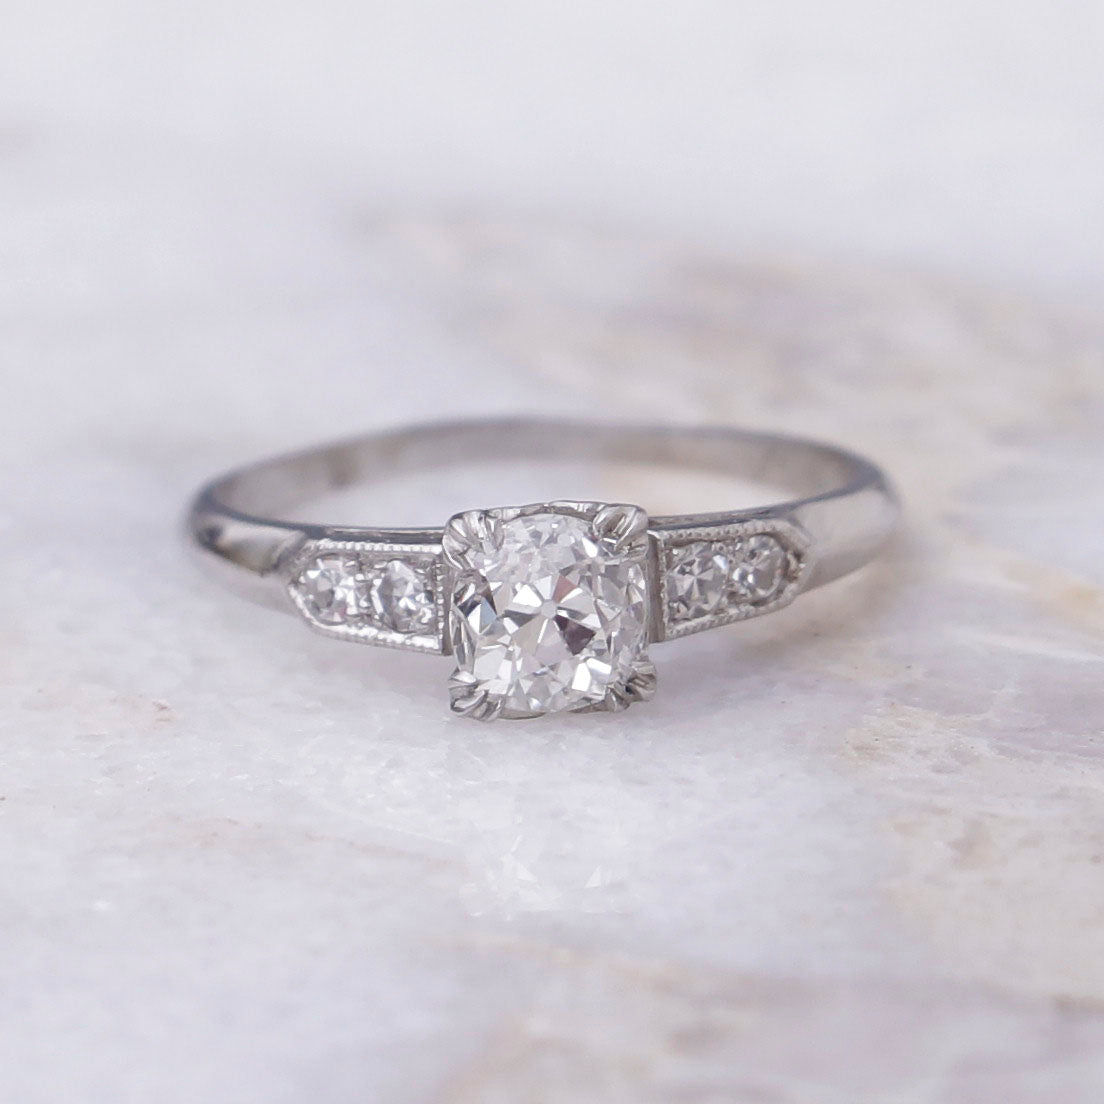 Circa 1930s Engagement ring #VR190214-2